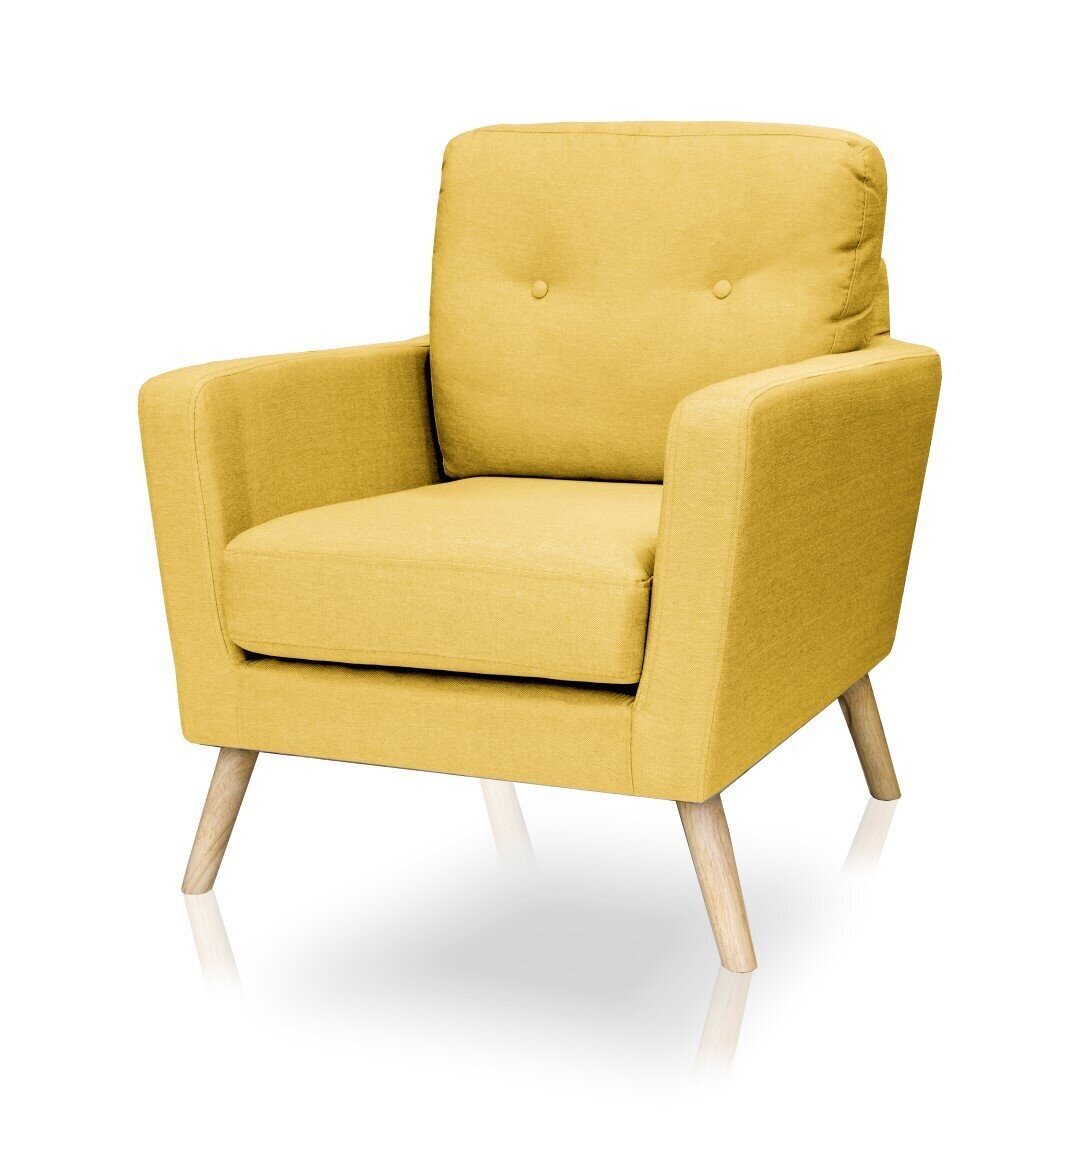 Clio chair gold